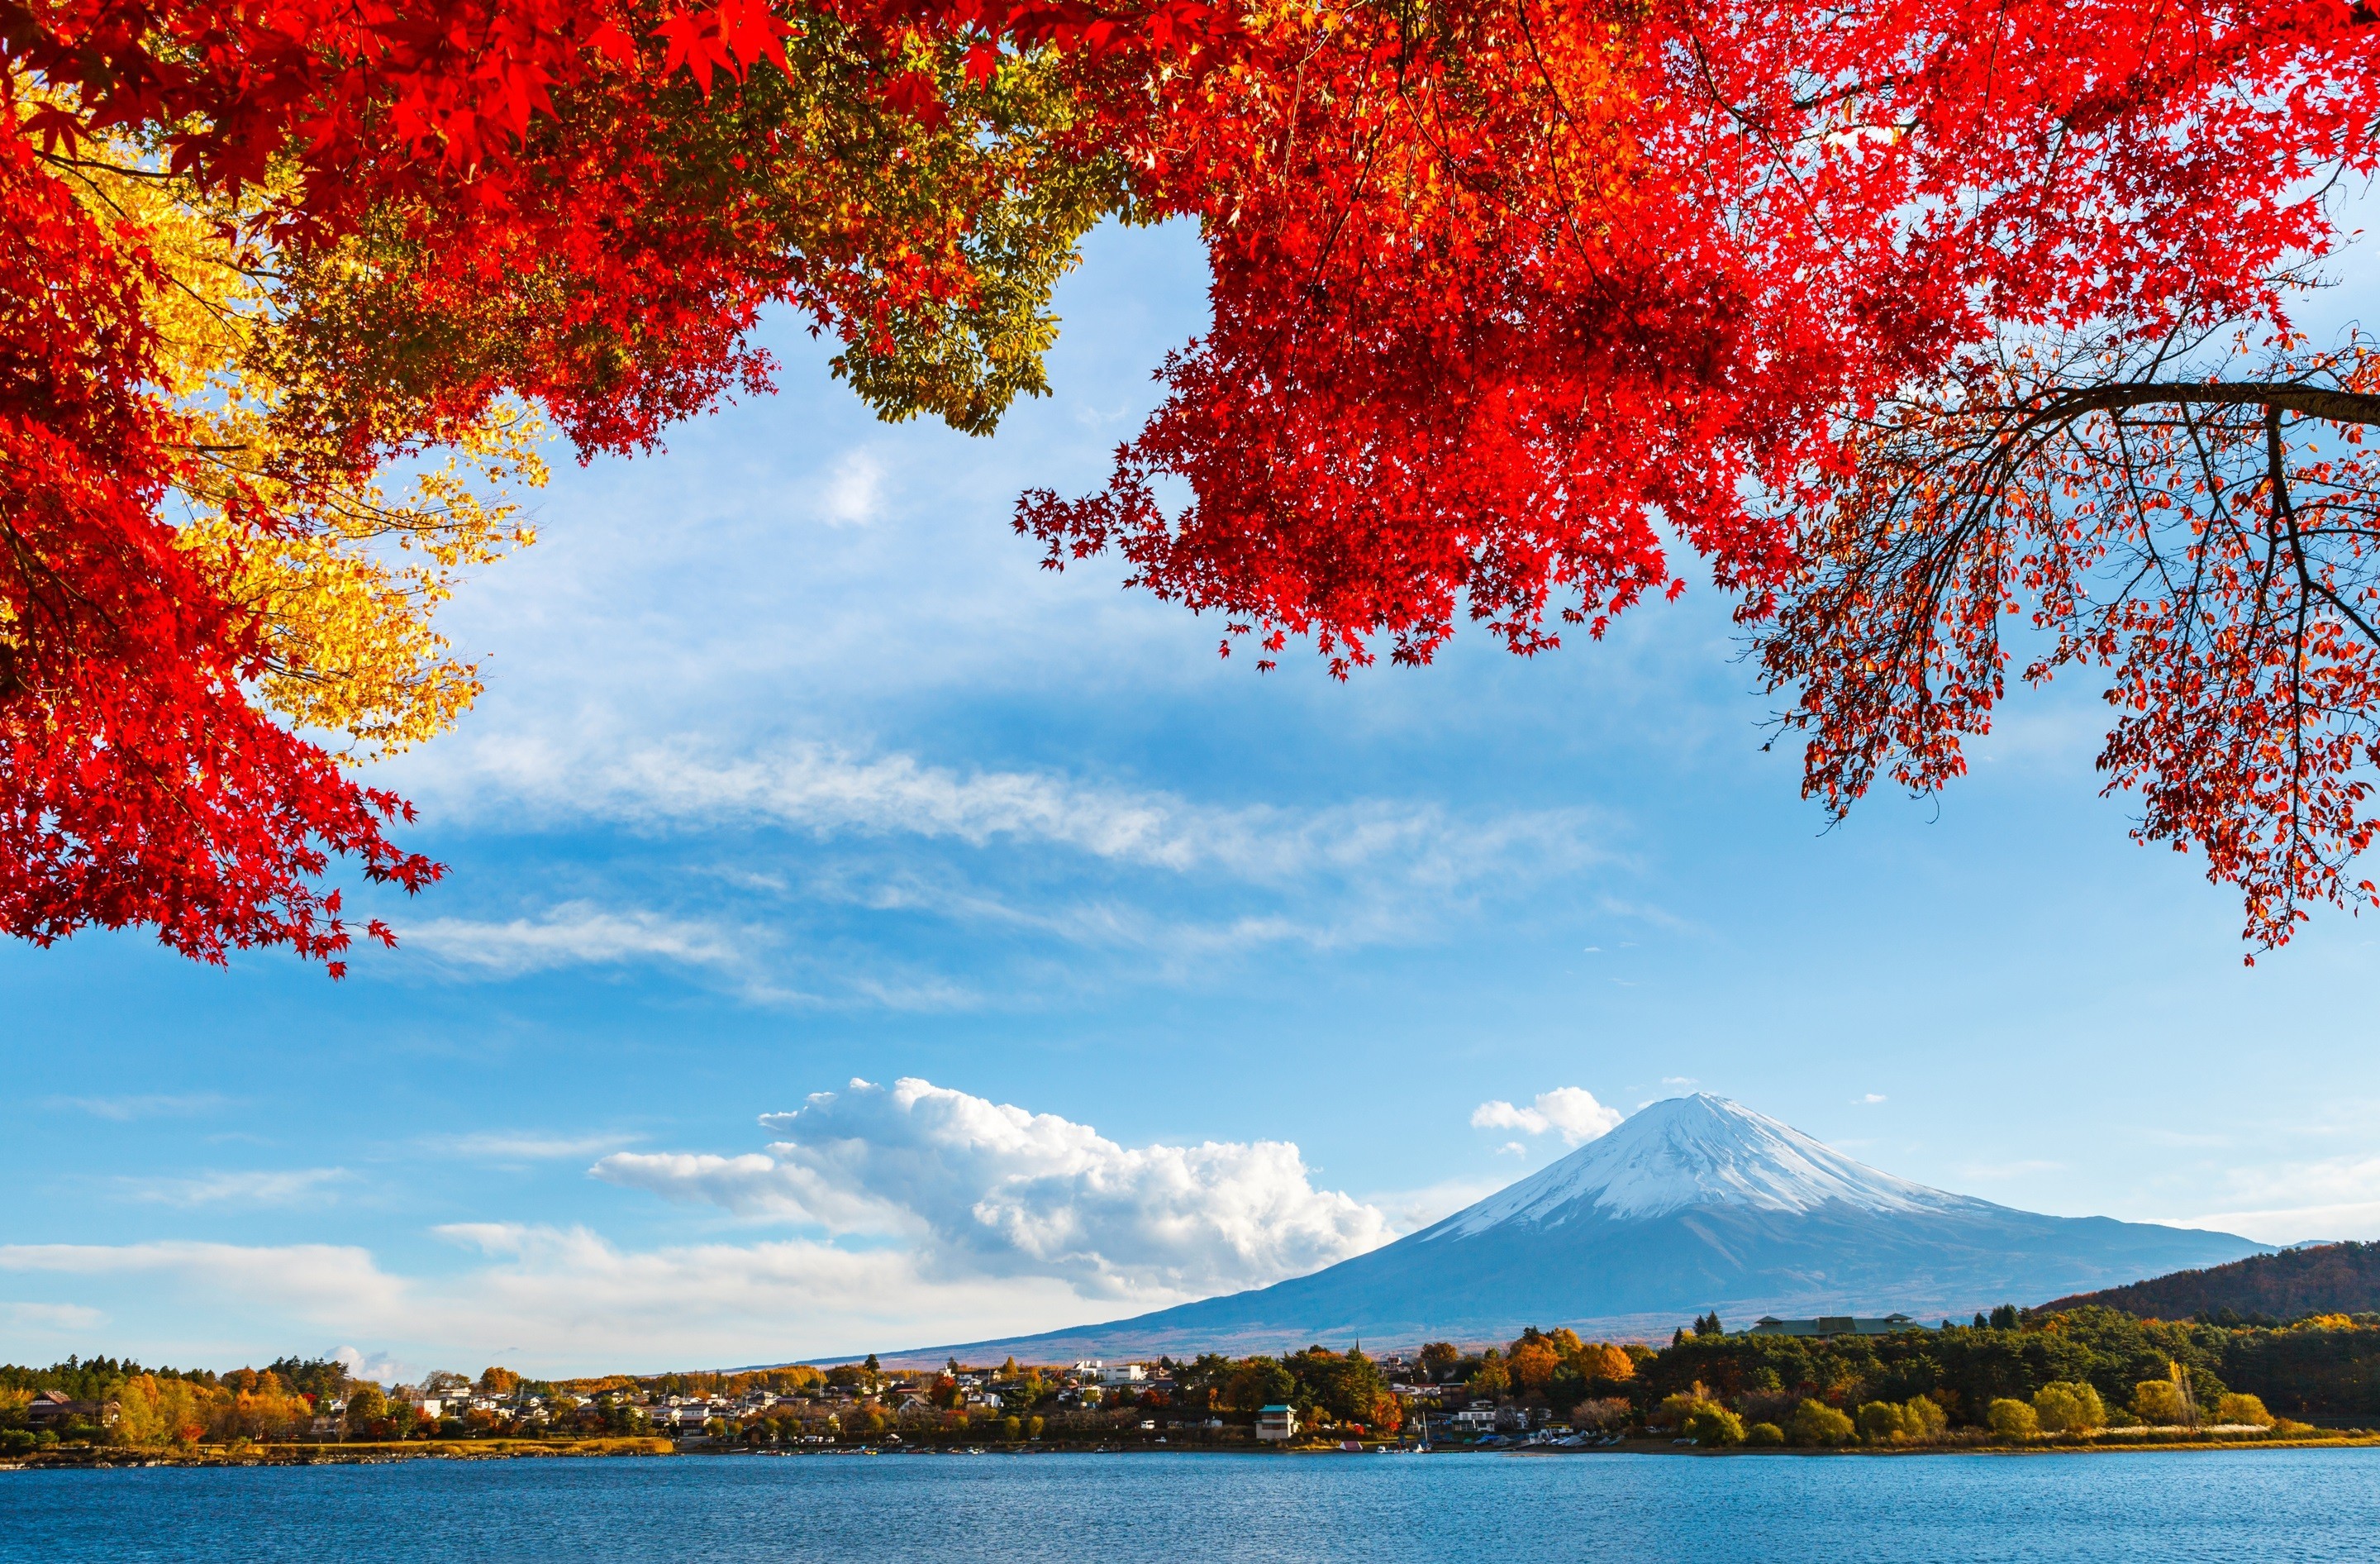 342742 Bild herunterladen erde/natur, fujisan, herbst, japan, vulkan, vulkane - Hintergrundbilder und Bildschirmschoner kostenlos